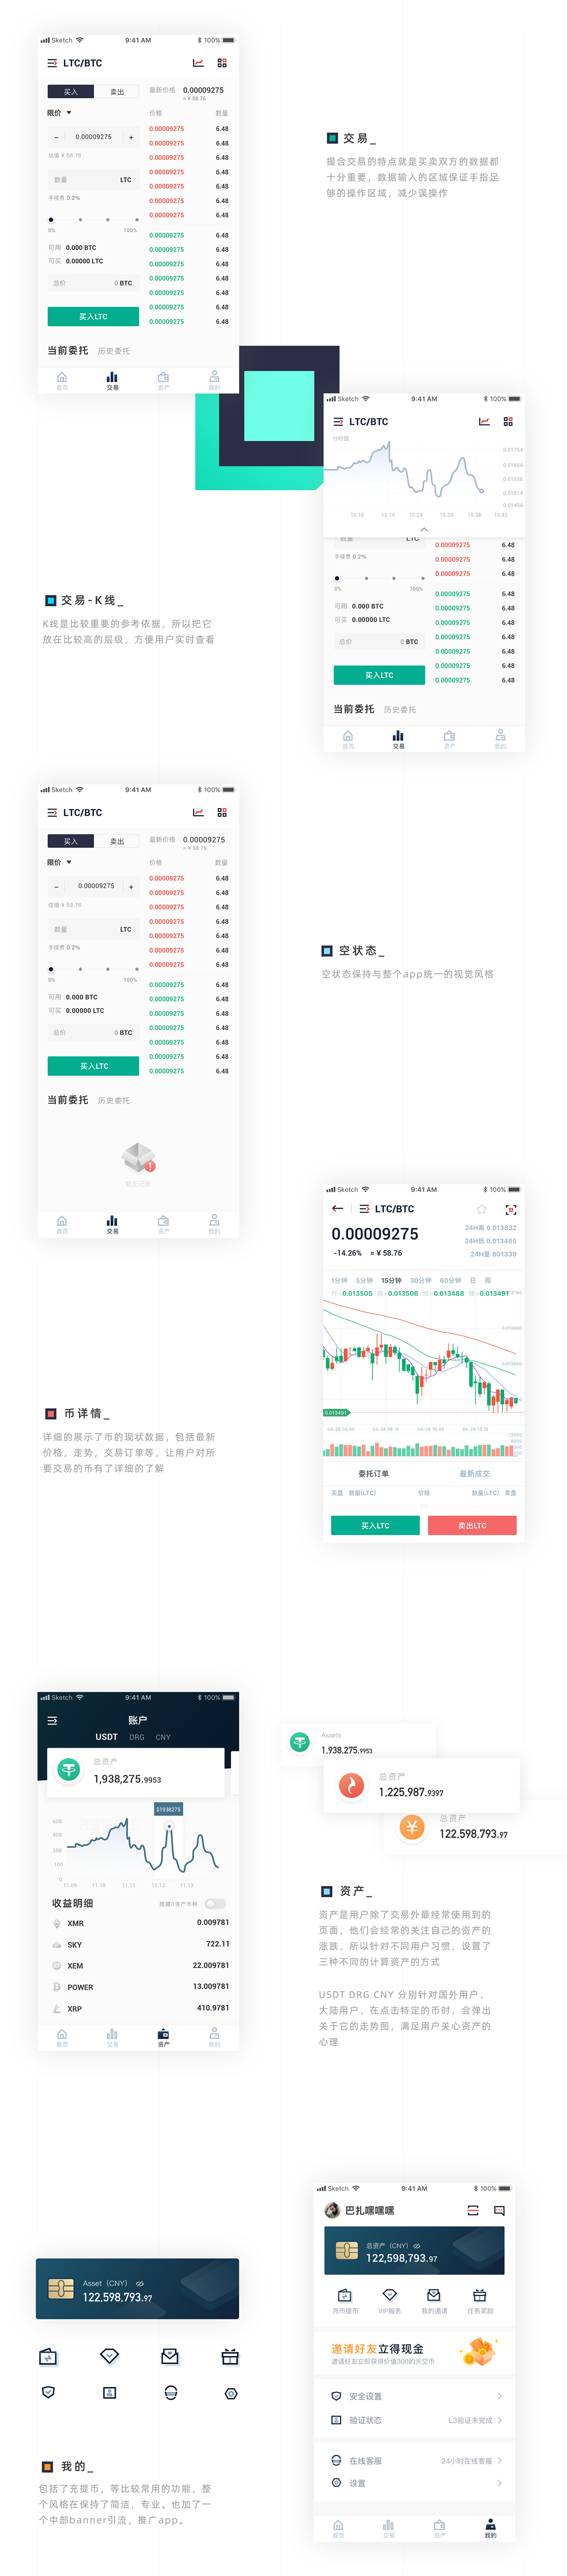 C2CX-Digital currency trading platform on Behance